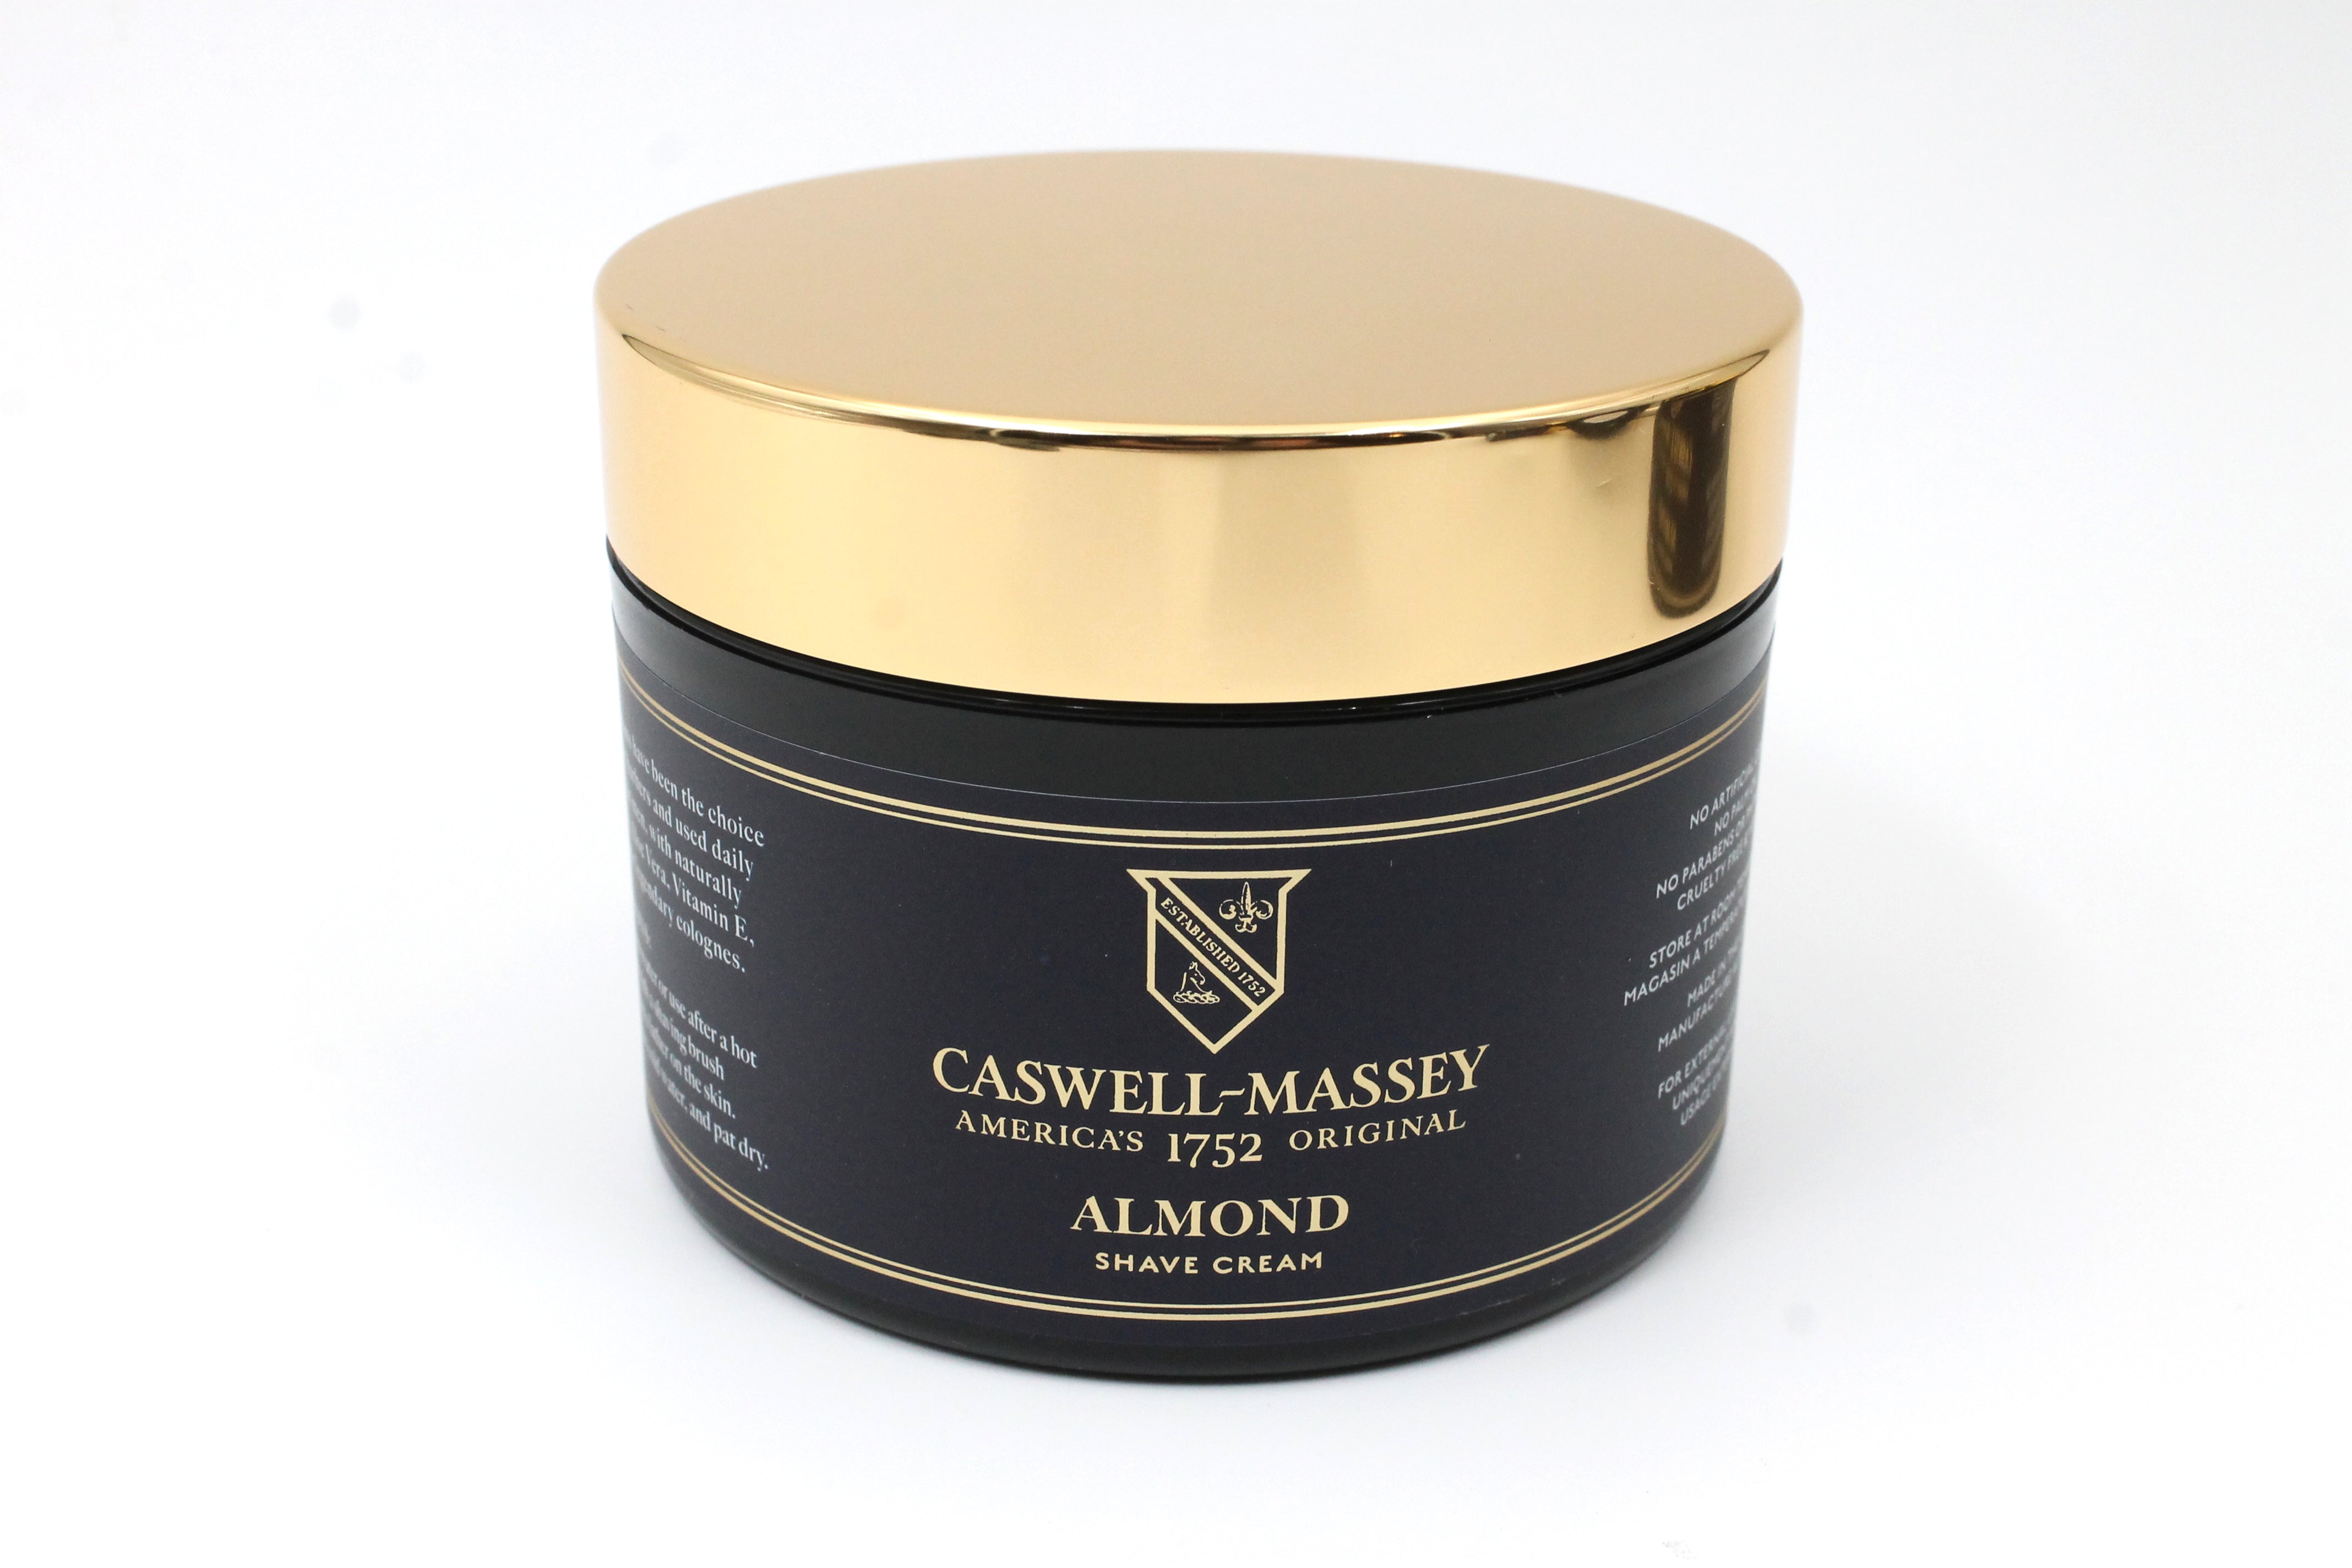 Caswell Massey Almond Luxury Shaving Cream in Jar - 226g (8 oz)